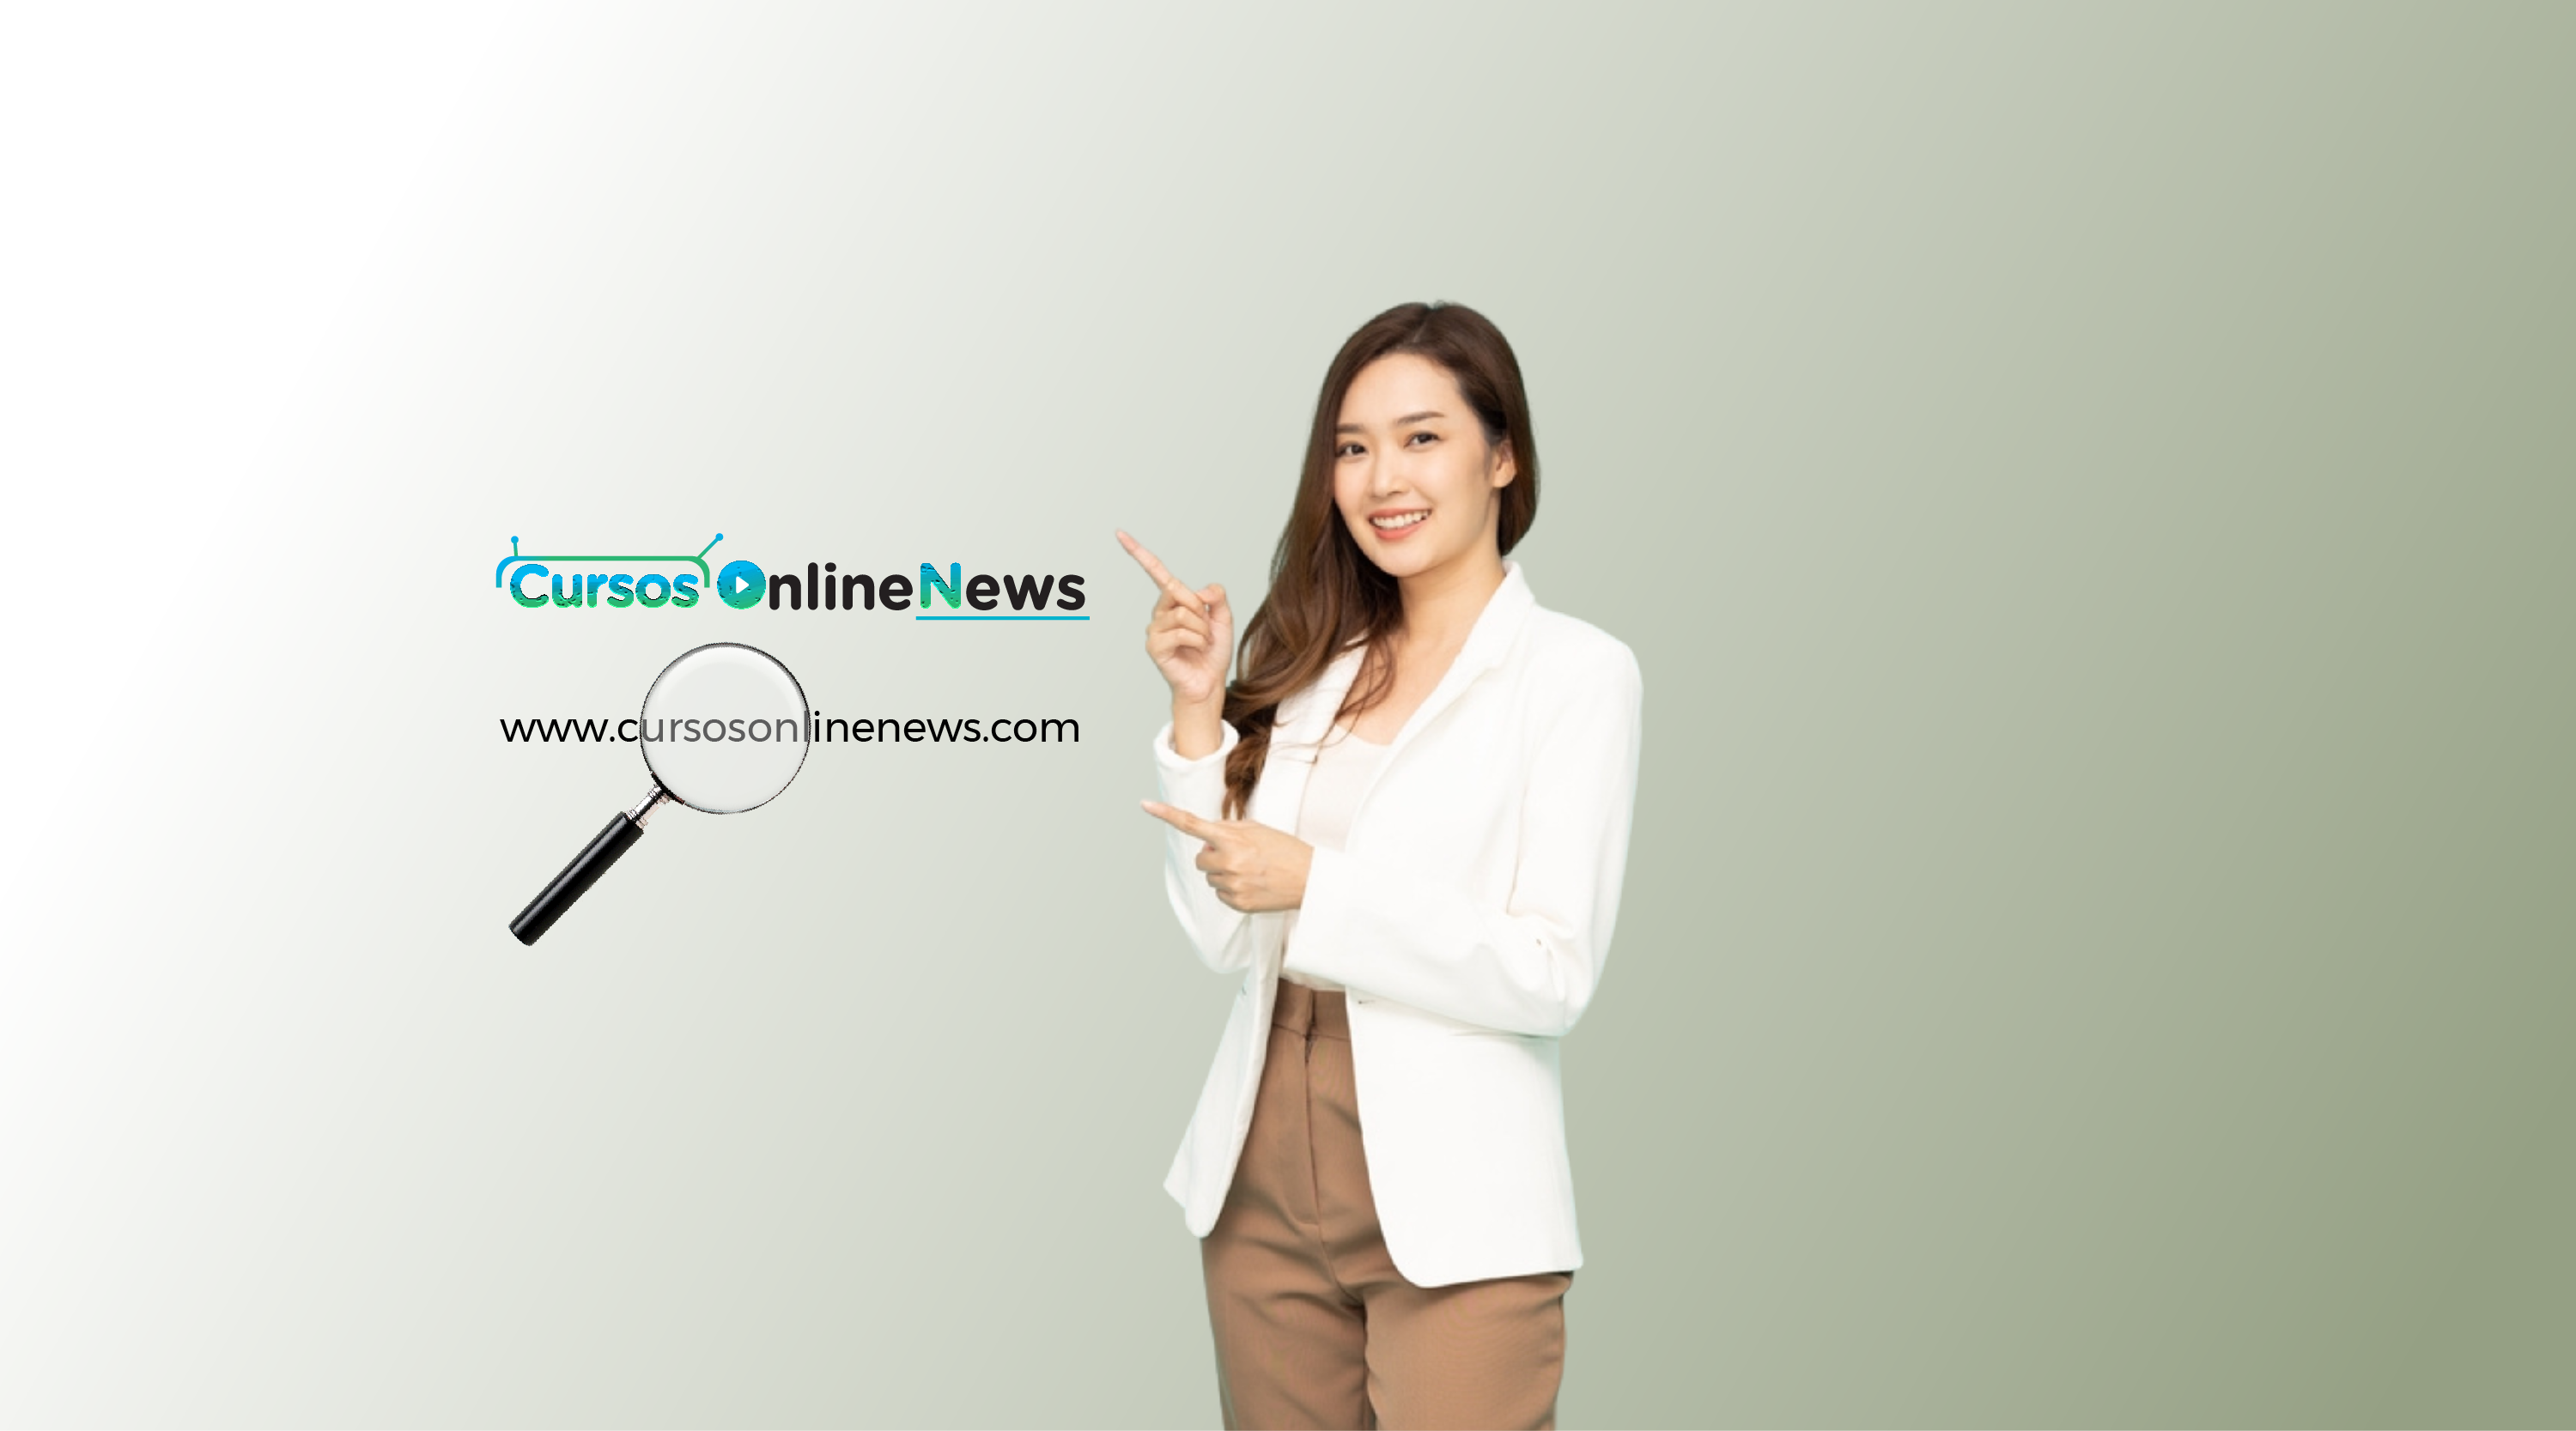 Plataforma Cursos Online News